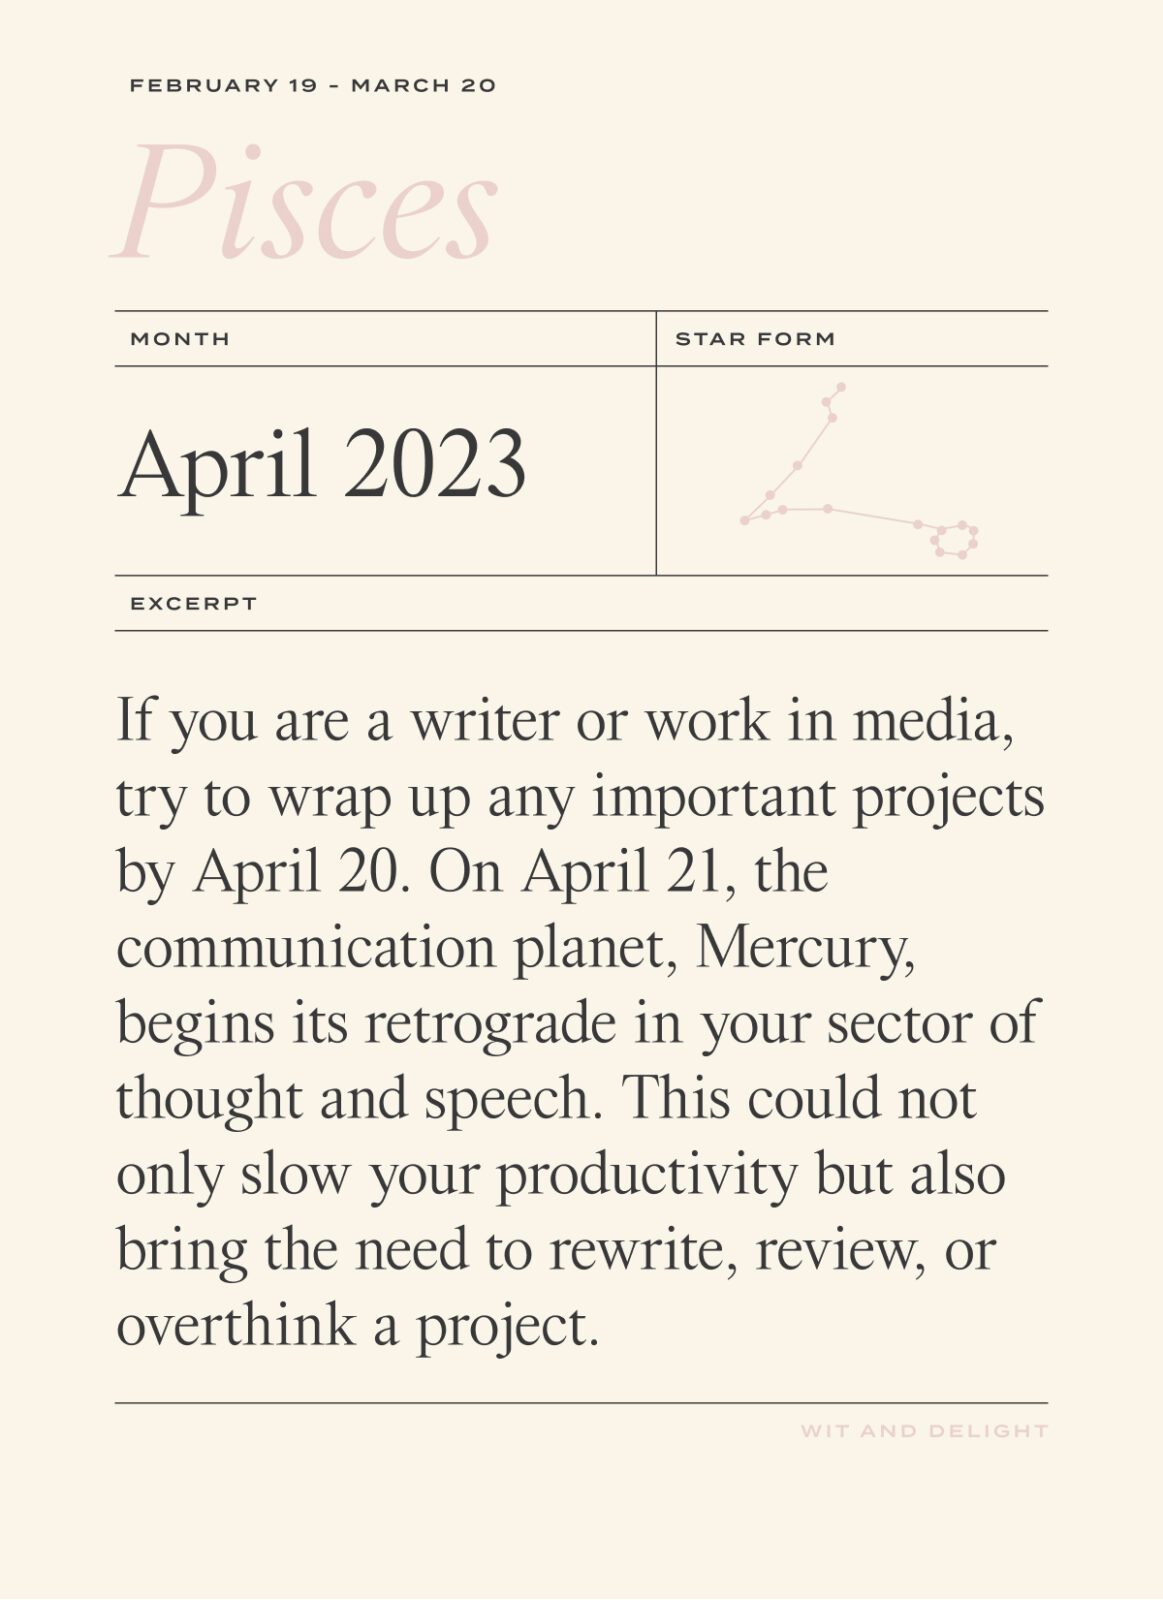 April 2023 Horoscopes: Mercury Retrograde Returns